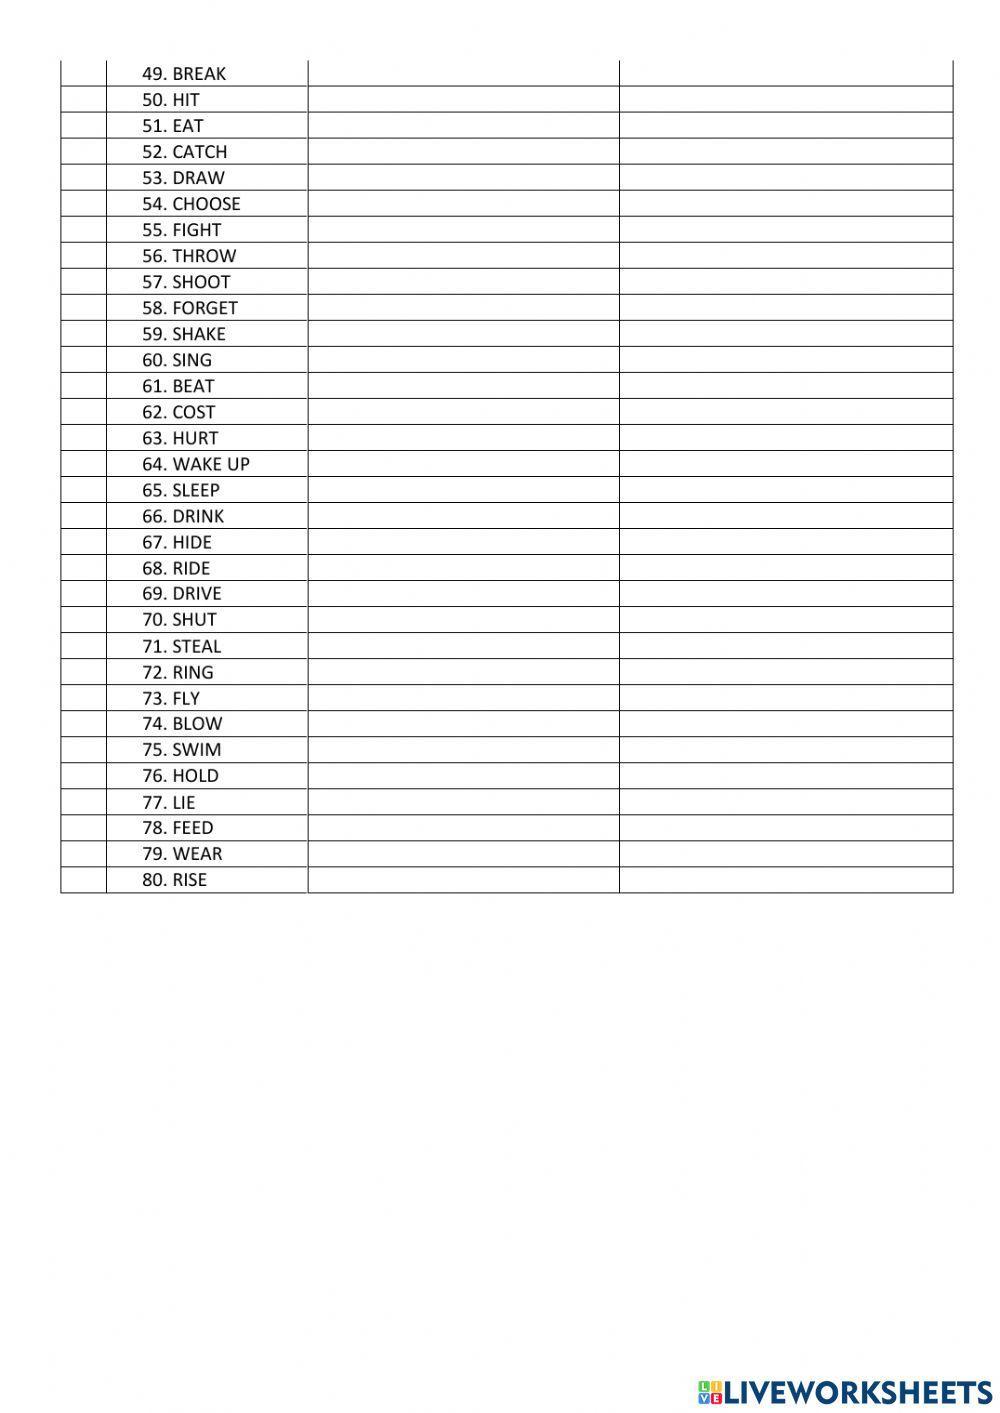 80 Irregular verbs to complete